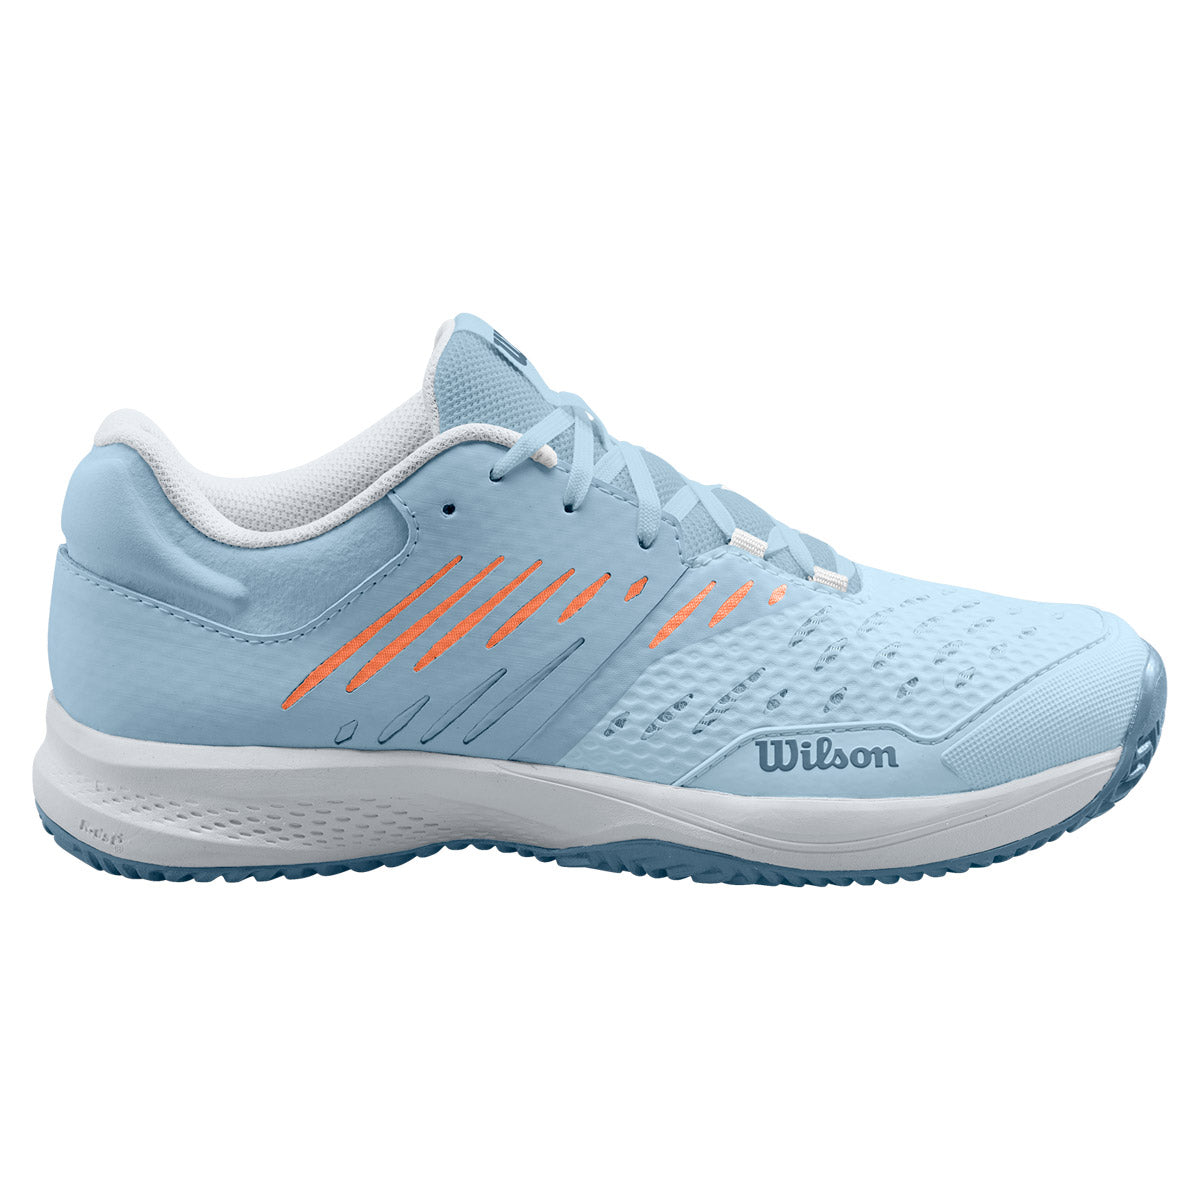 WILSON KAOS COMP 3.0 W 网球鞋 WRS328790 